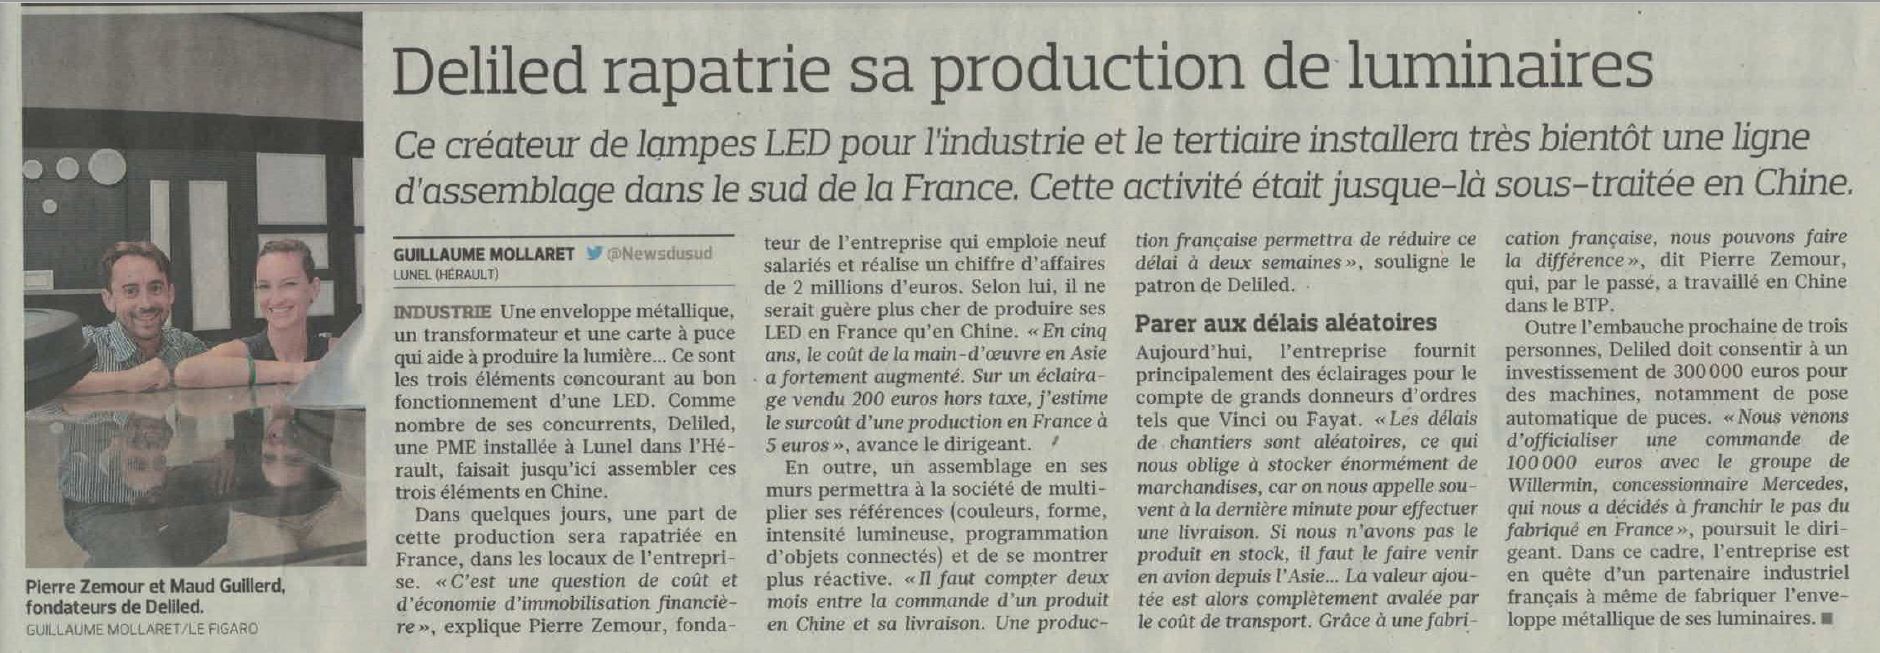 Article Figaro "DELILED rapatrie sa production de luminares"